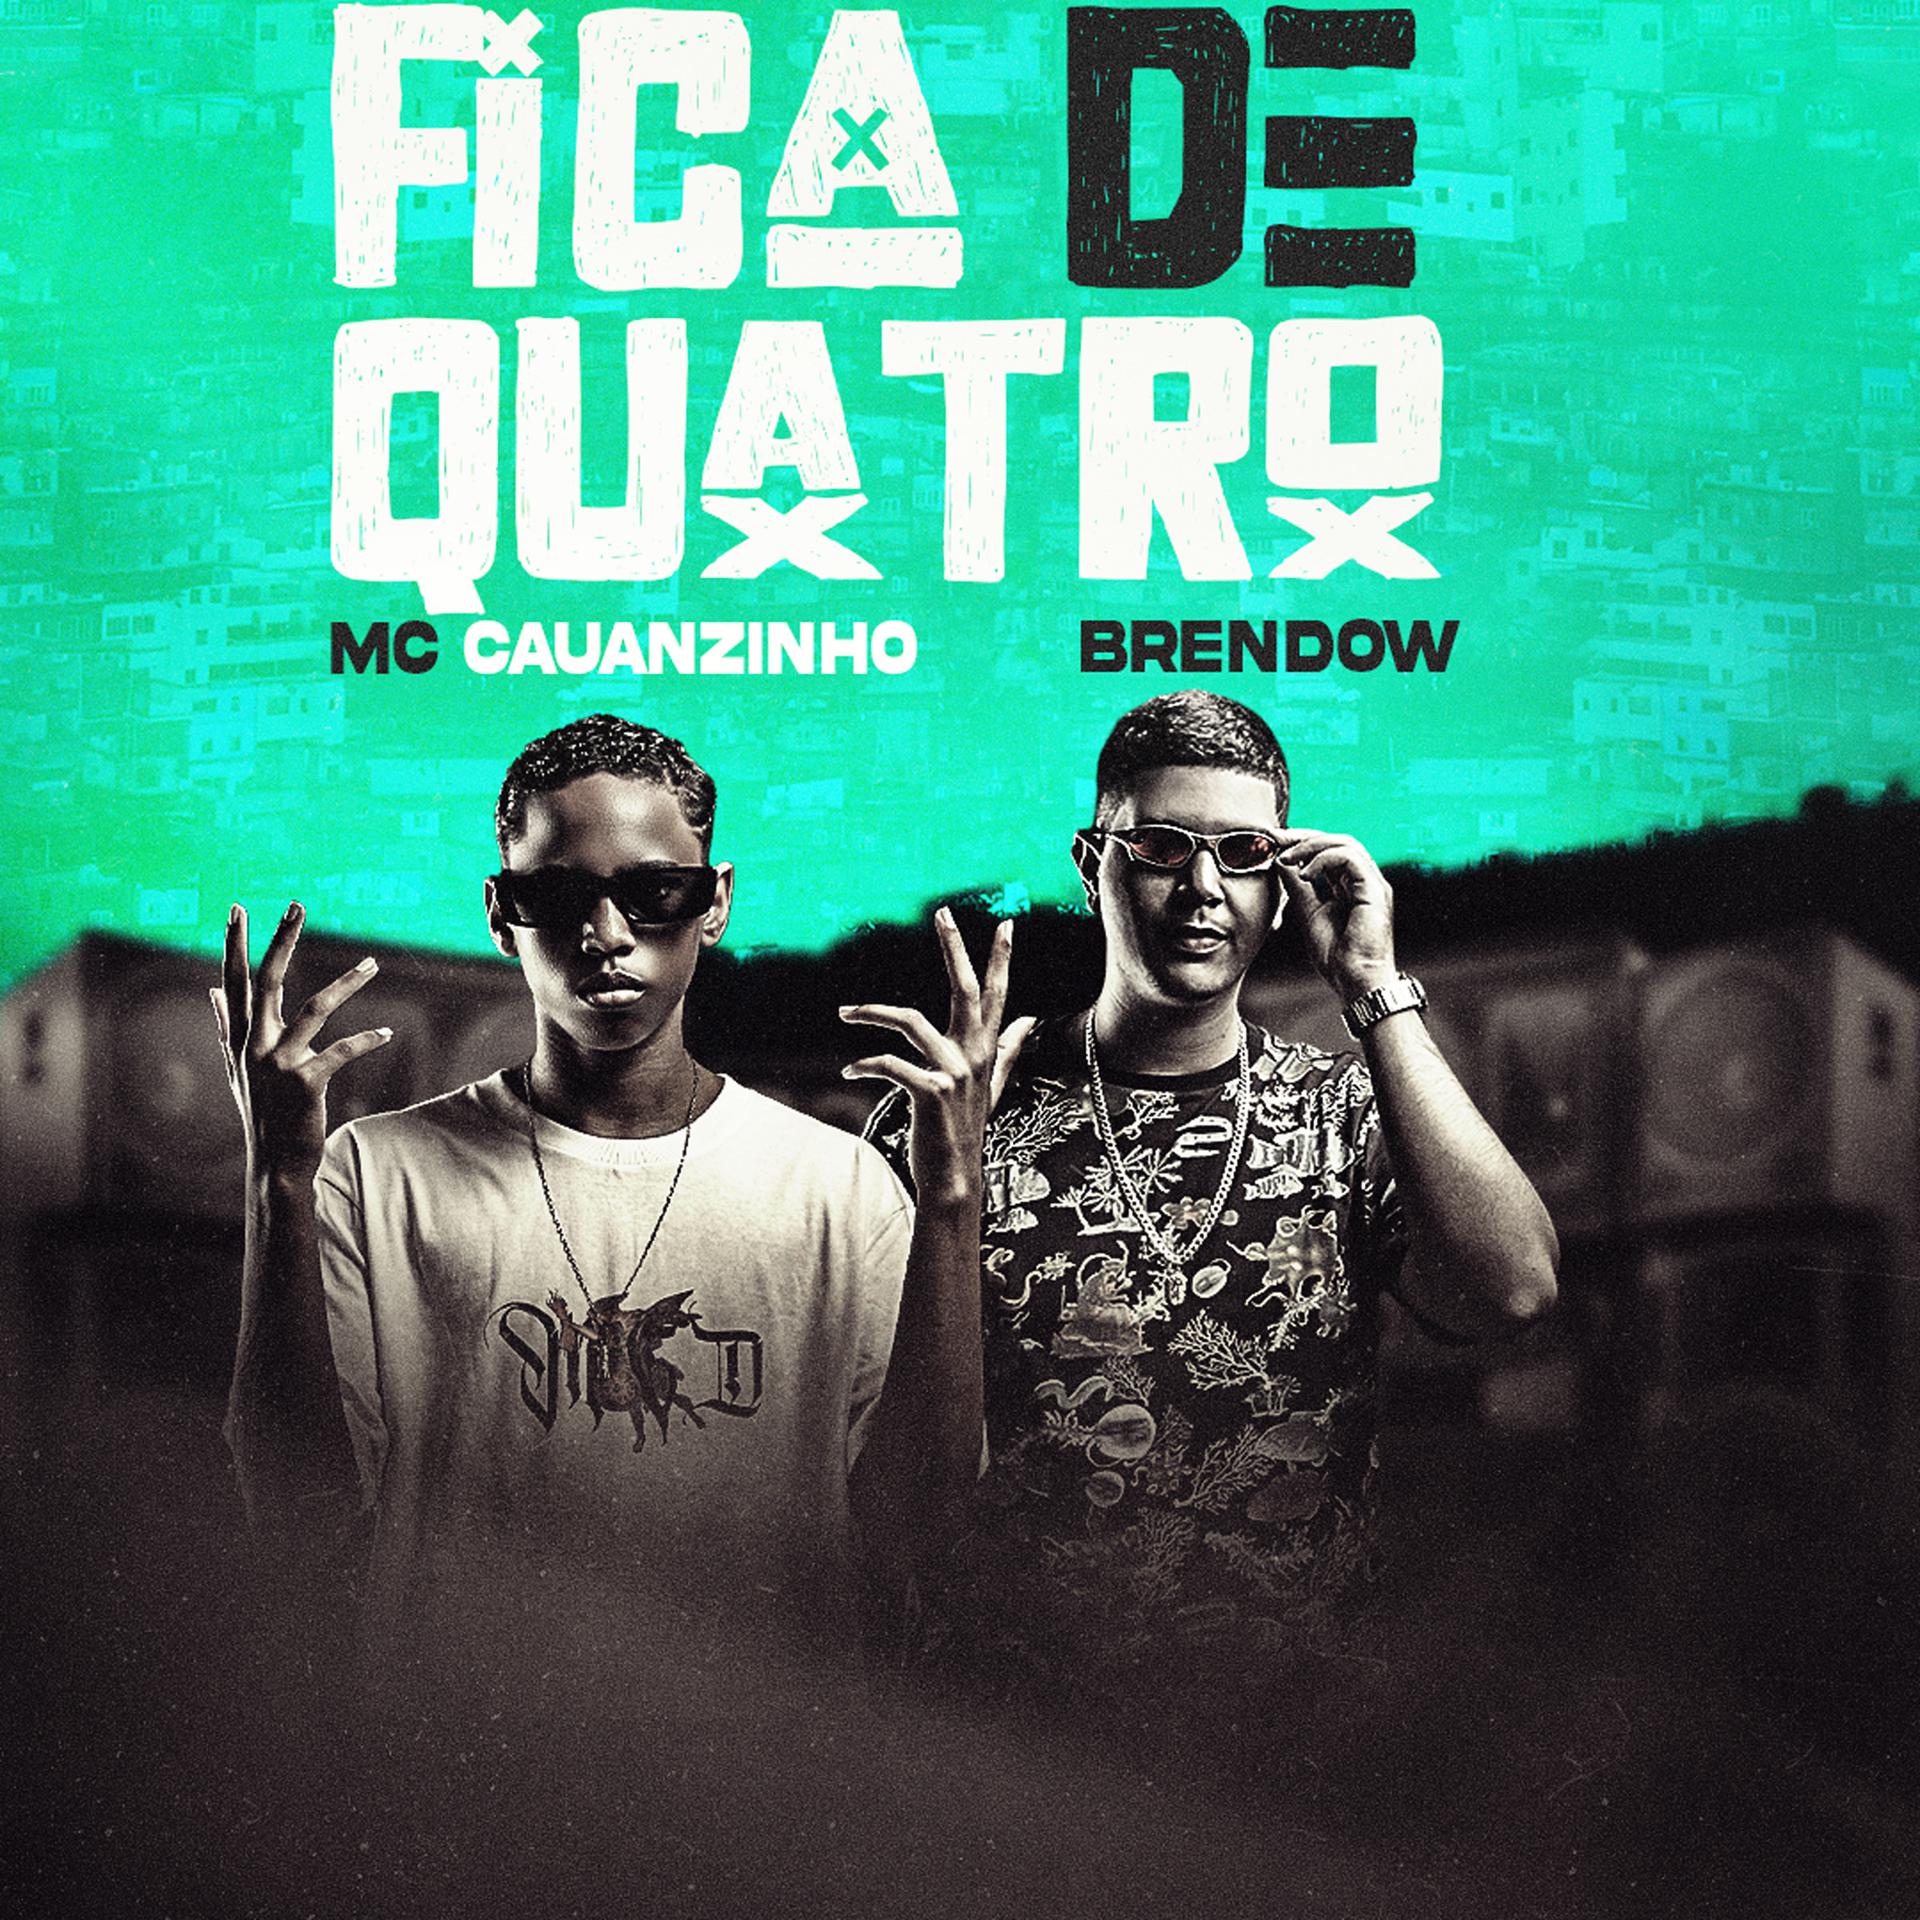 Постер альбома Fica de Quatro